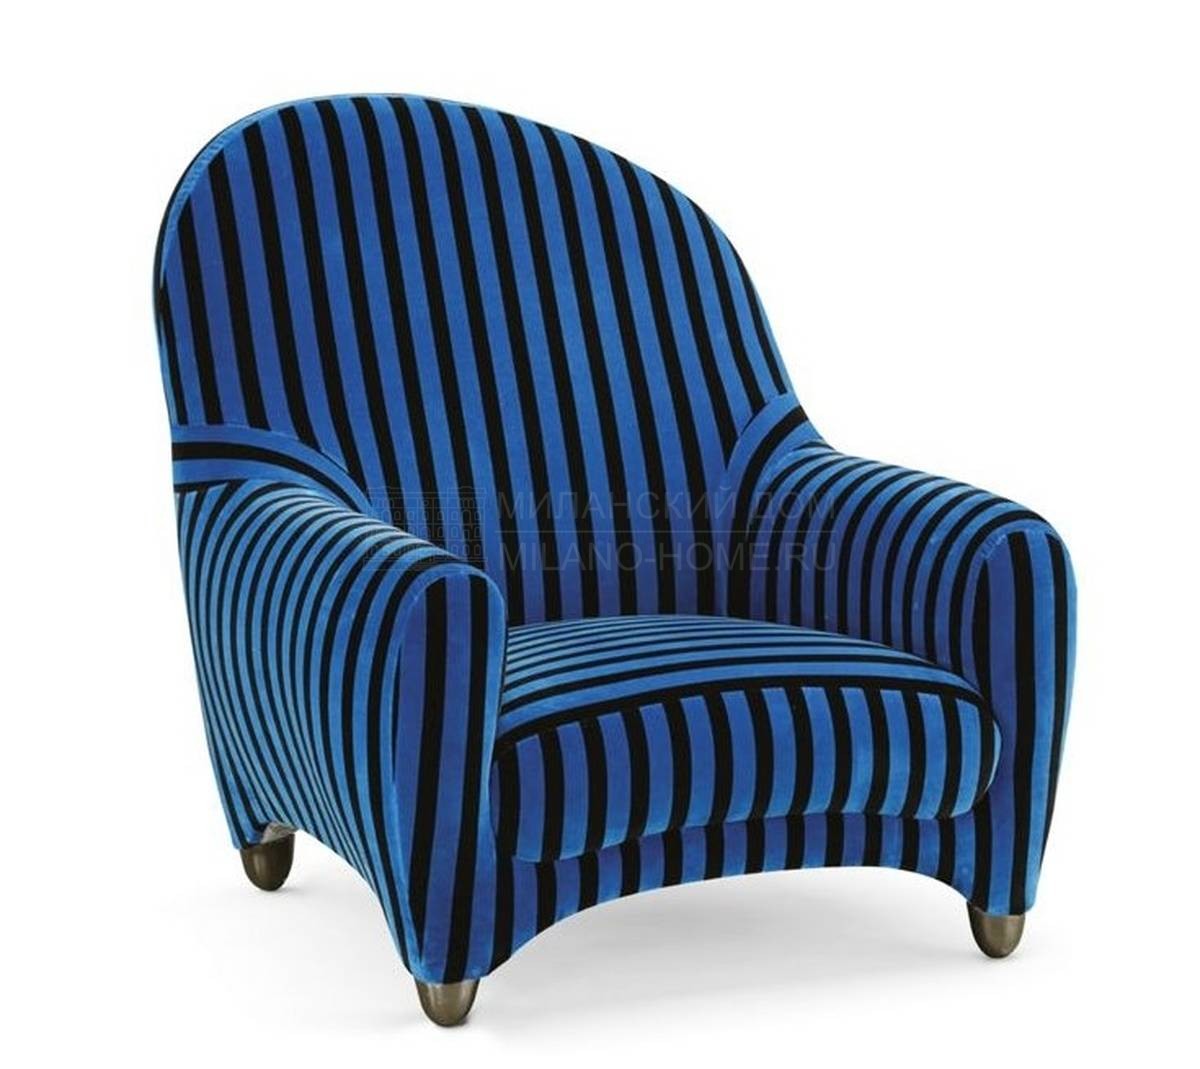 Кресло Maison lacroix armchair из Франции фабрики ROCHE BOBOIS